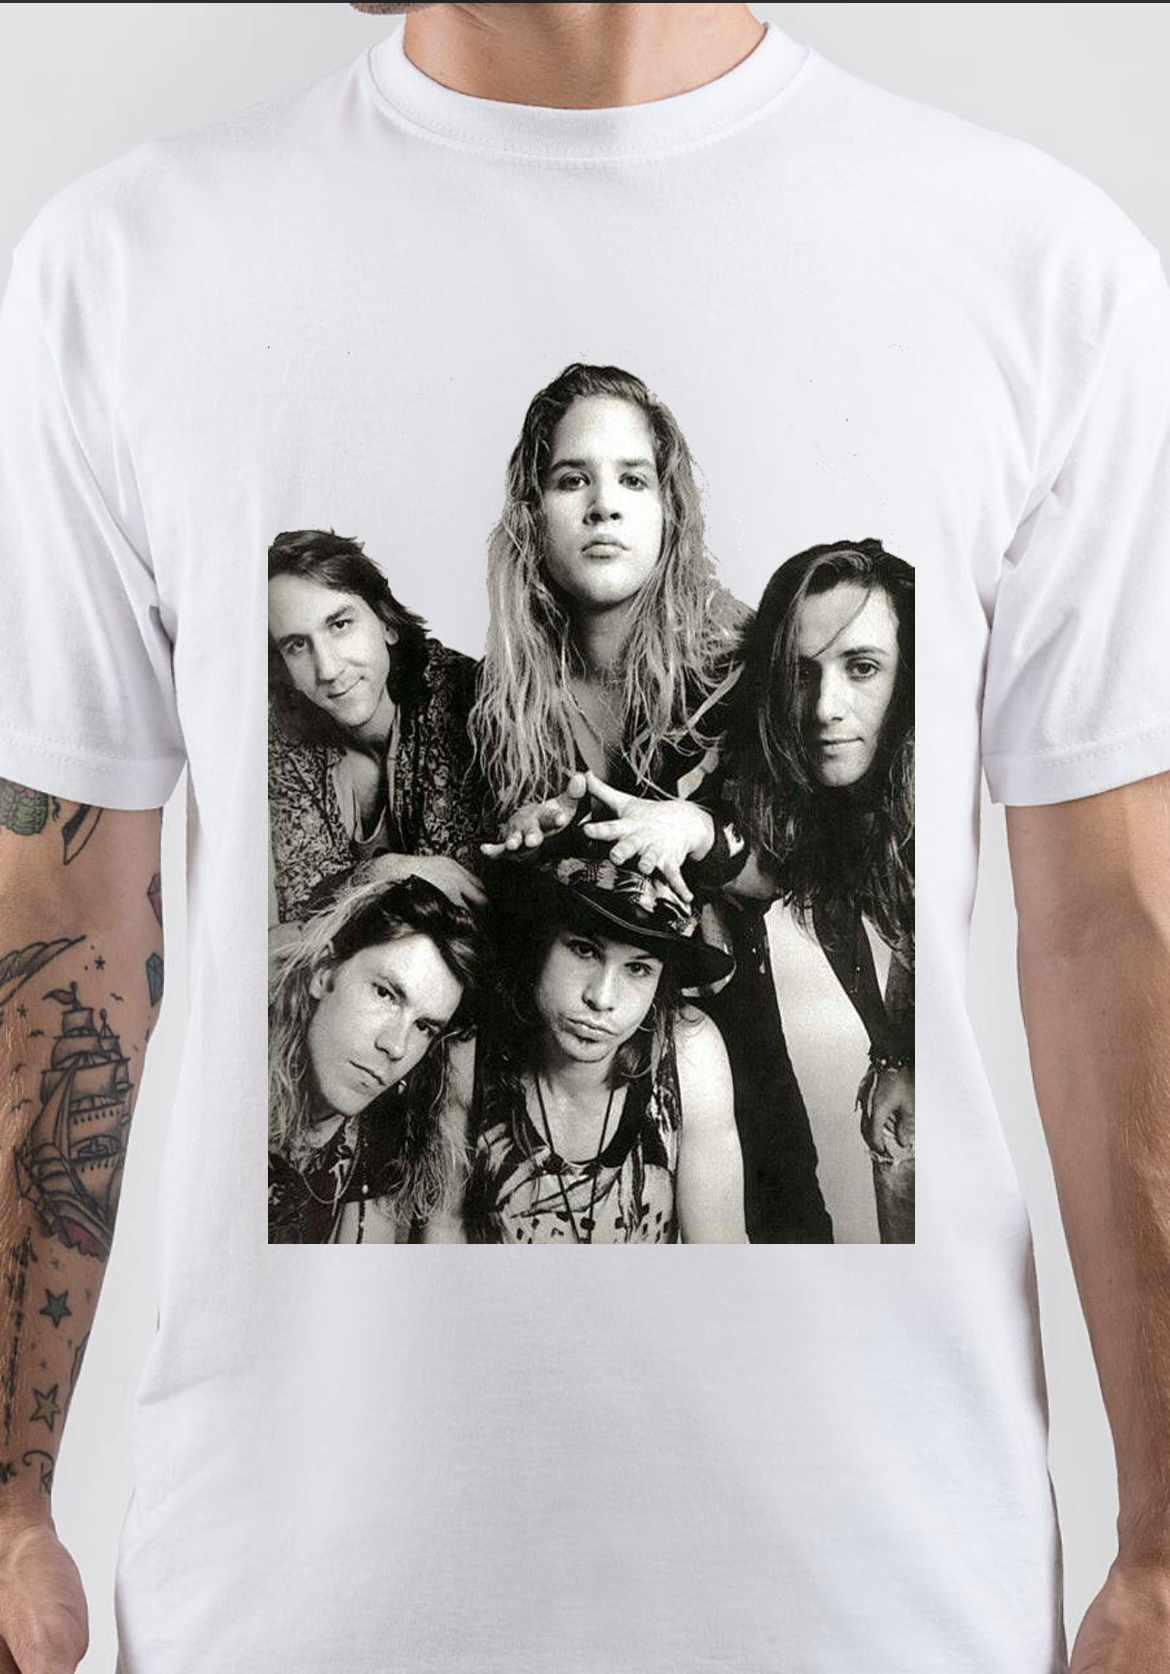 Mother Love Bone T-Shirt And Merchandise